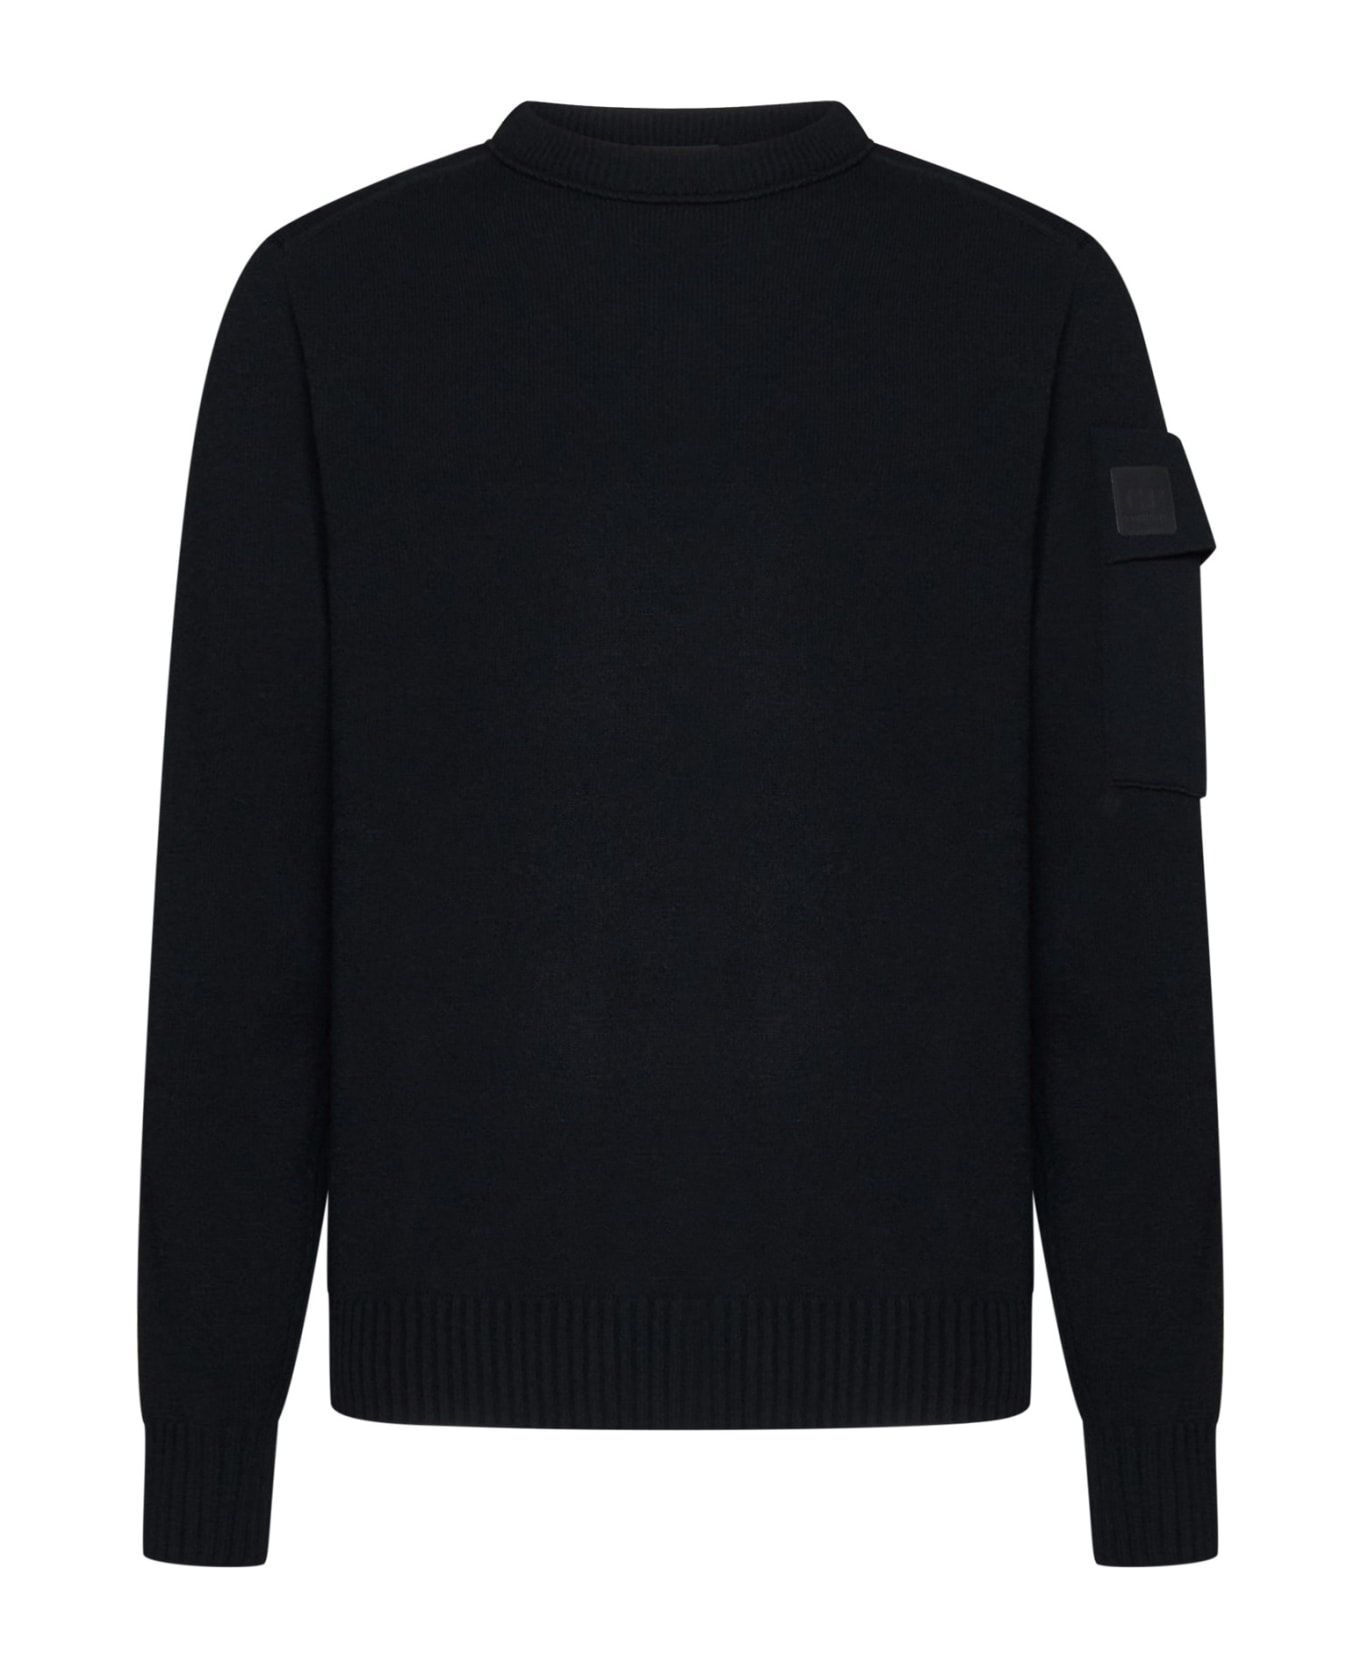 C.P. Company Metropolis Sweater - Black ニットウェア